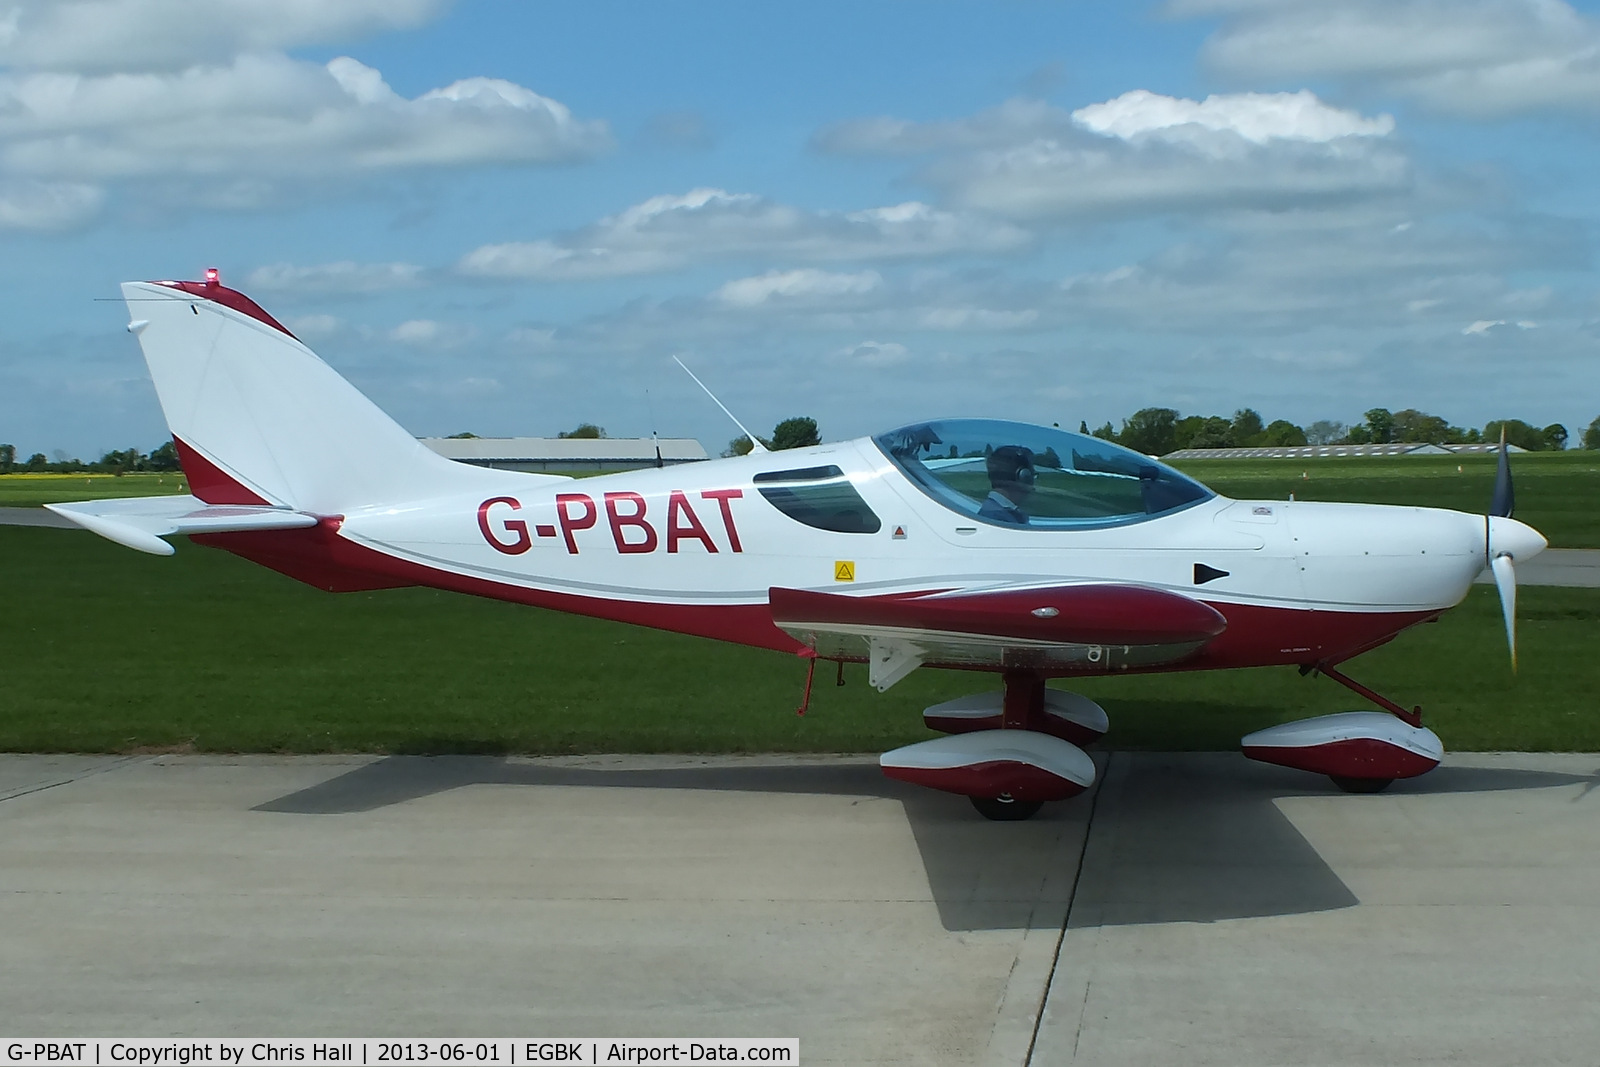 G-PBAT, 2009 CZAW SportCruiser C/N 09SC296, at AeroExpo 2013